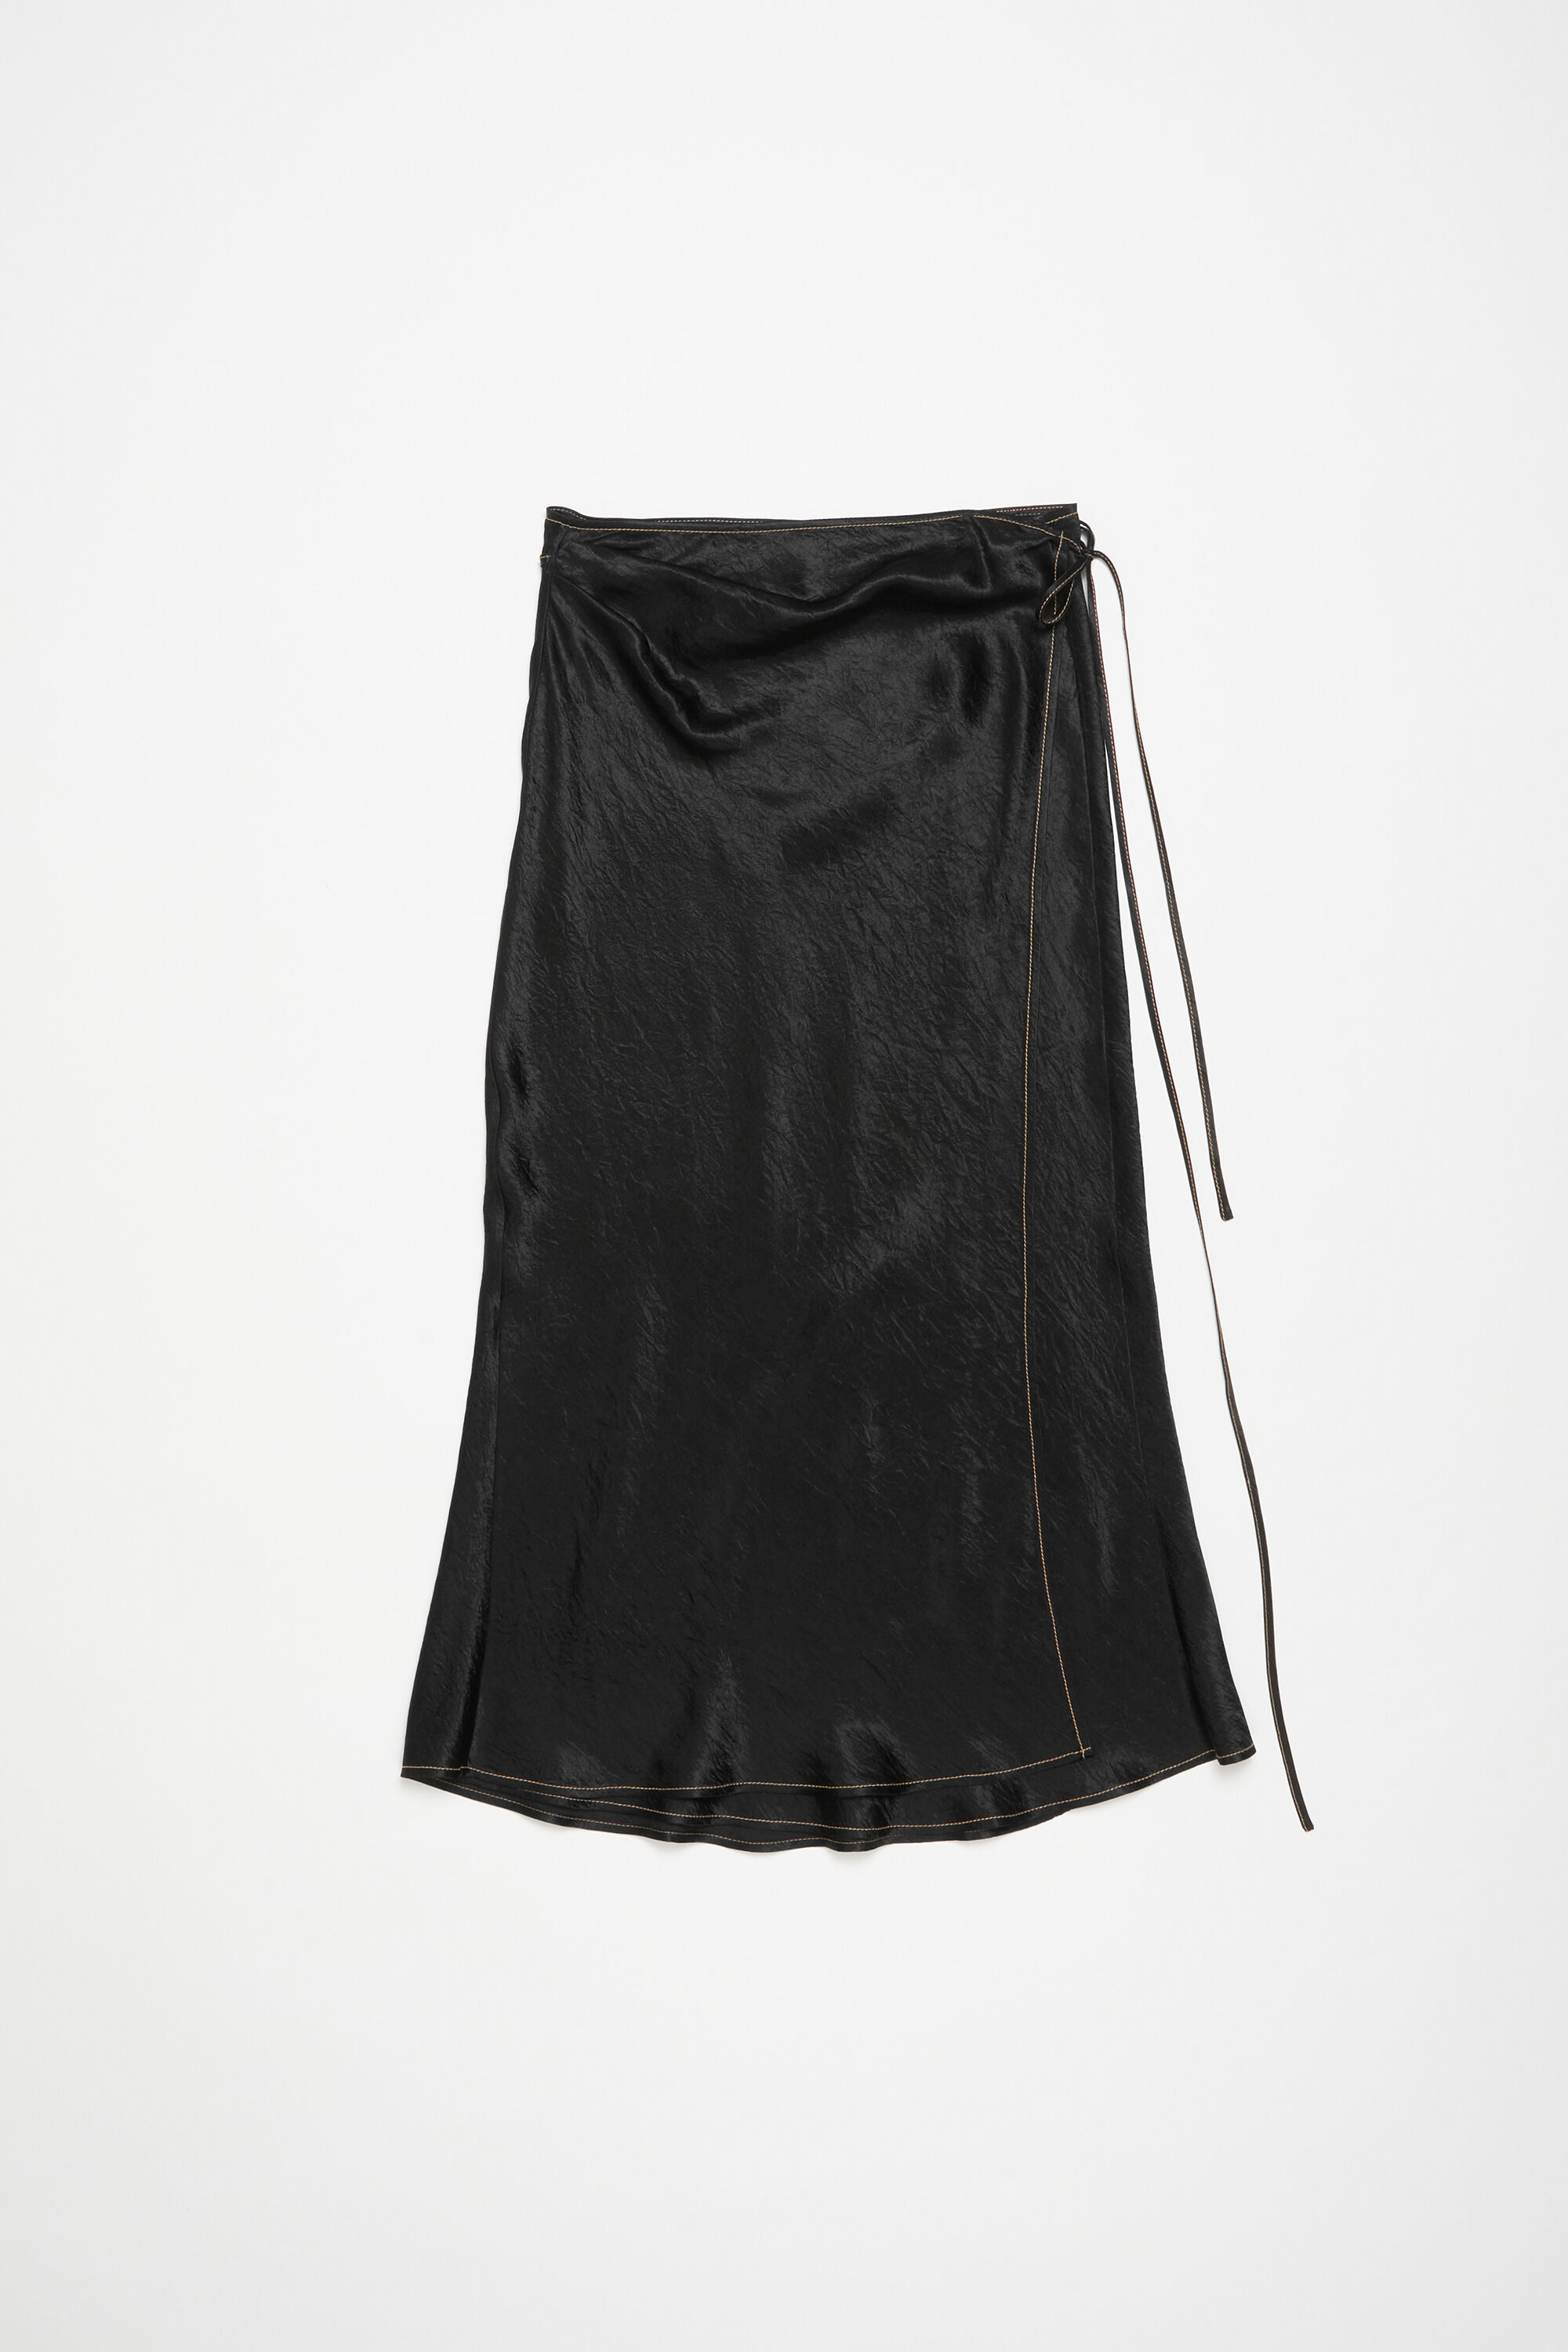 Acne Studios – Women's Skirts